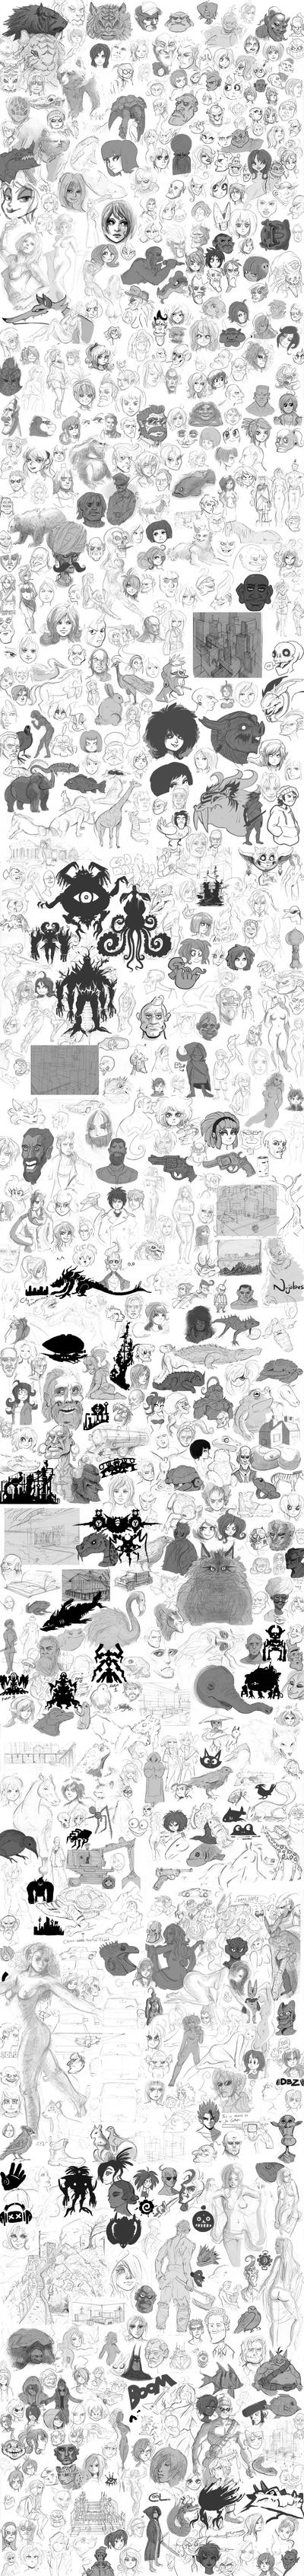 ultra massive torrent of drawings 2012